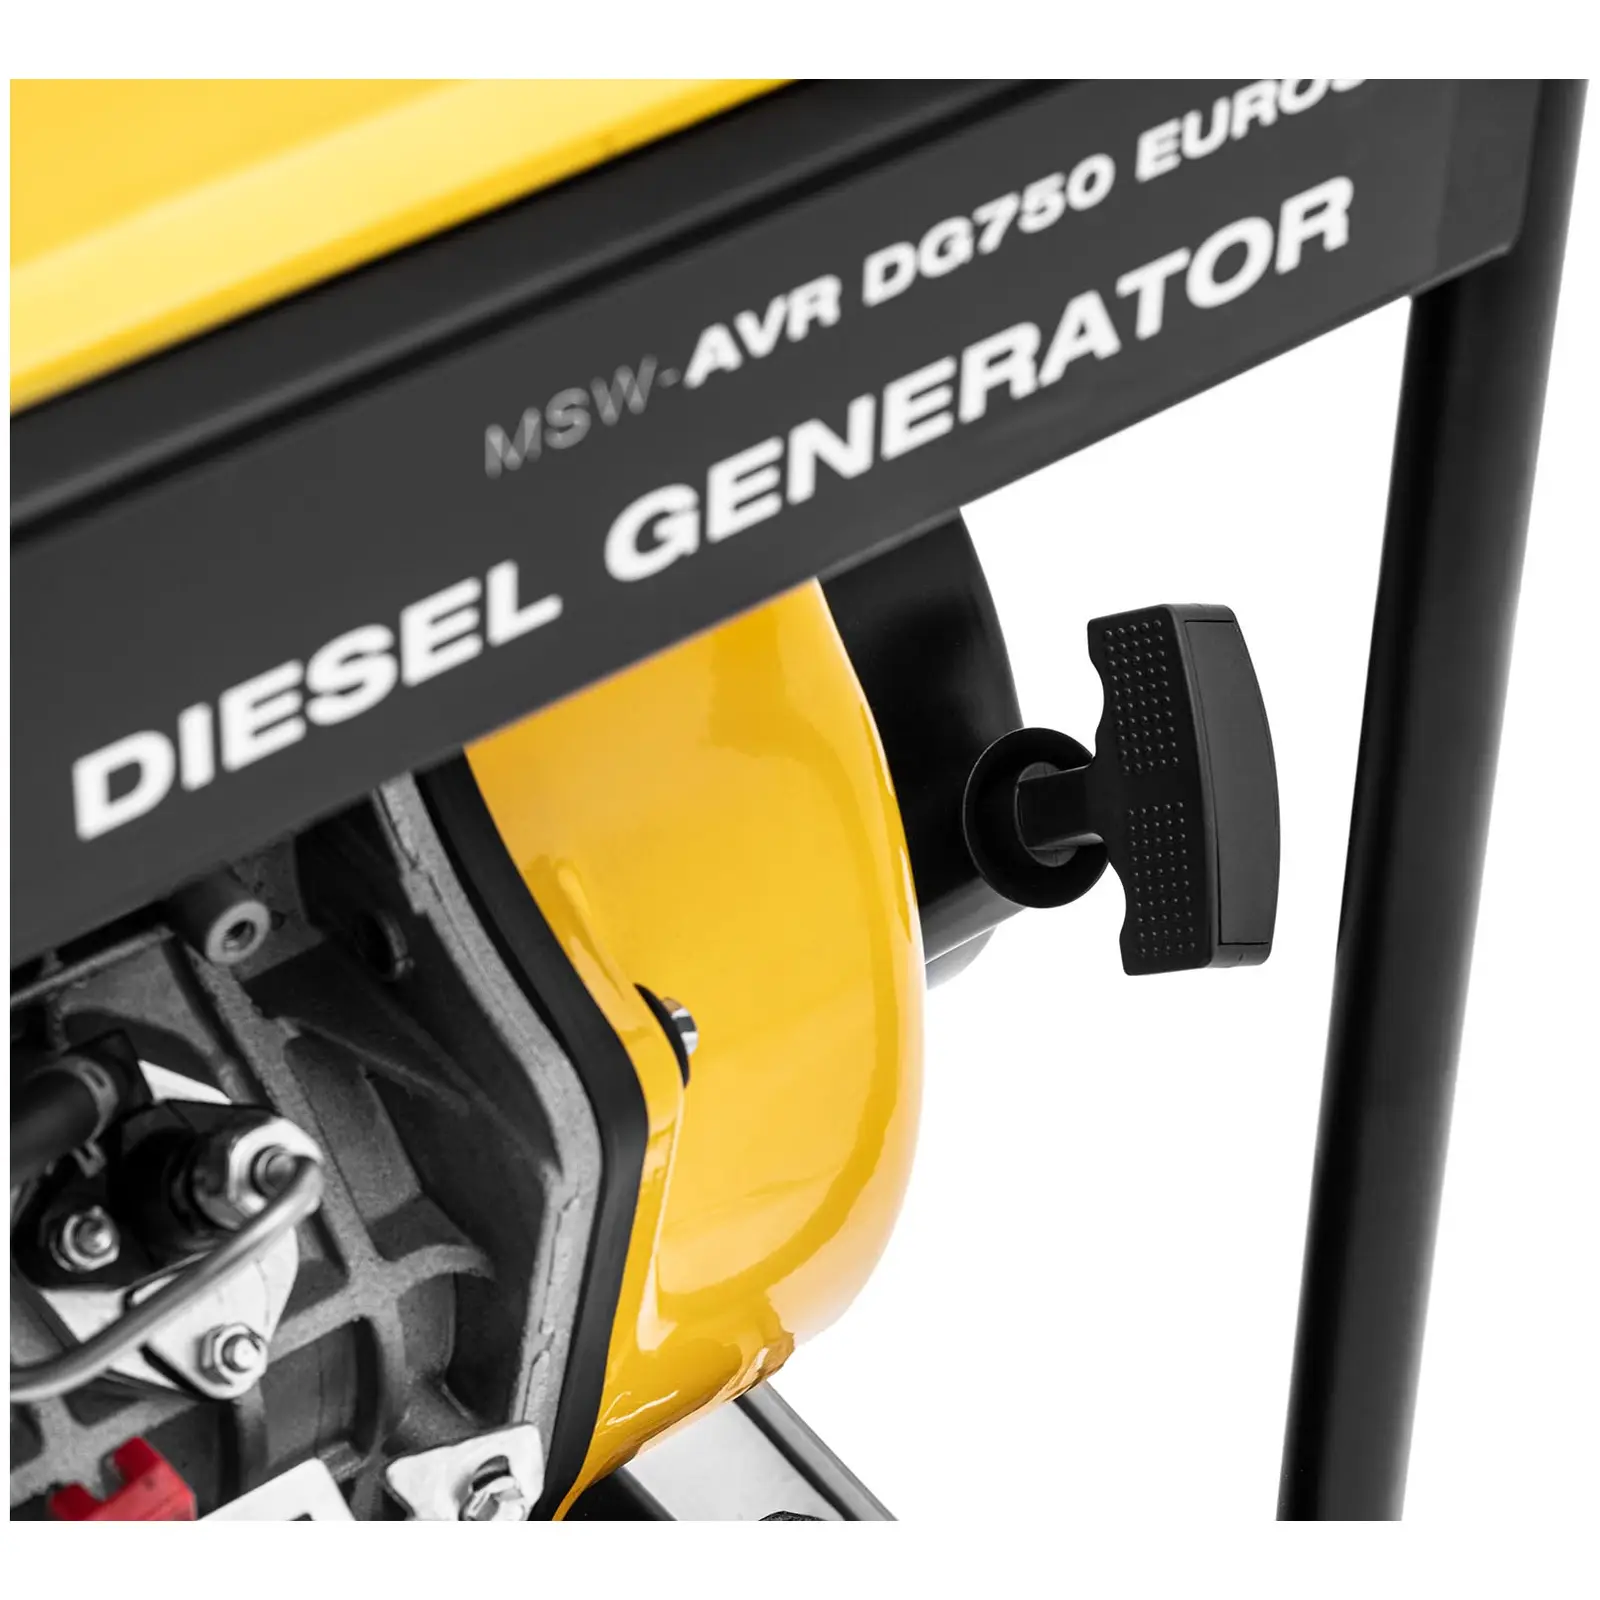 Dieselgenerator - 1650 / 4600 W - 12.5 L - 230/400 V - mobil - AVR - Euro 5